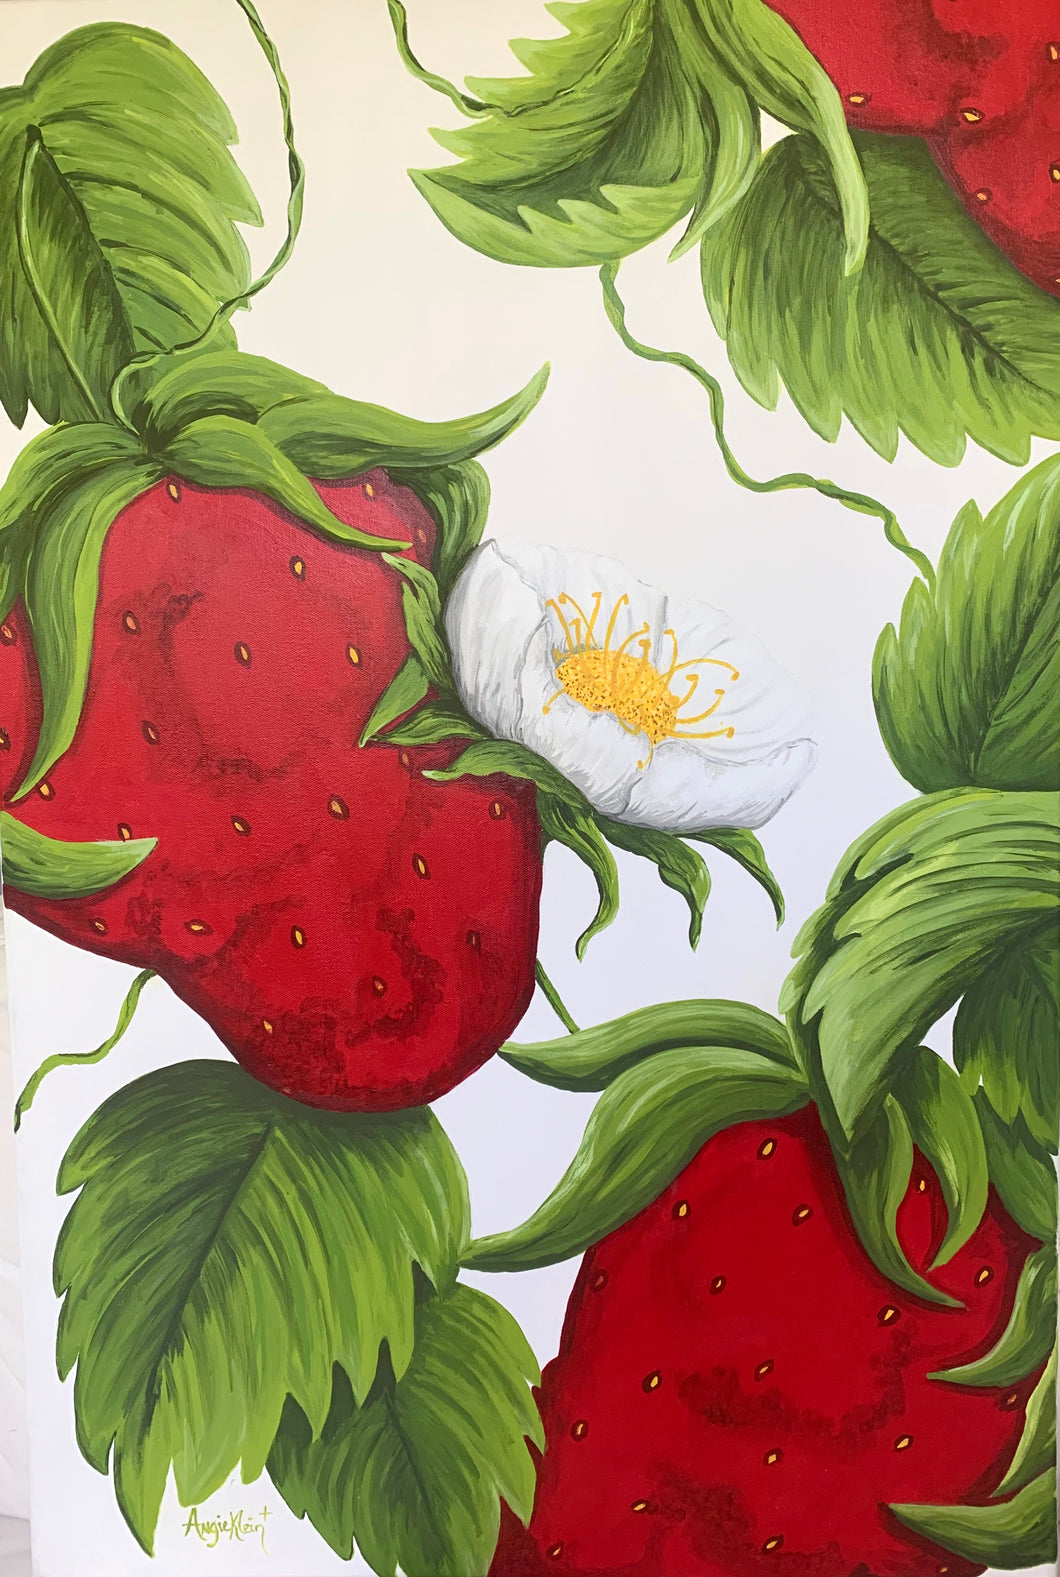 Strawberry Heaven - Original Art